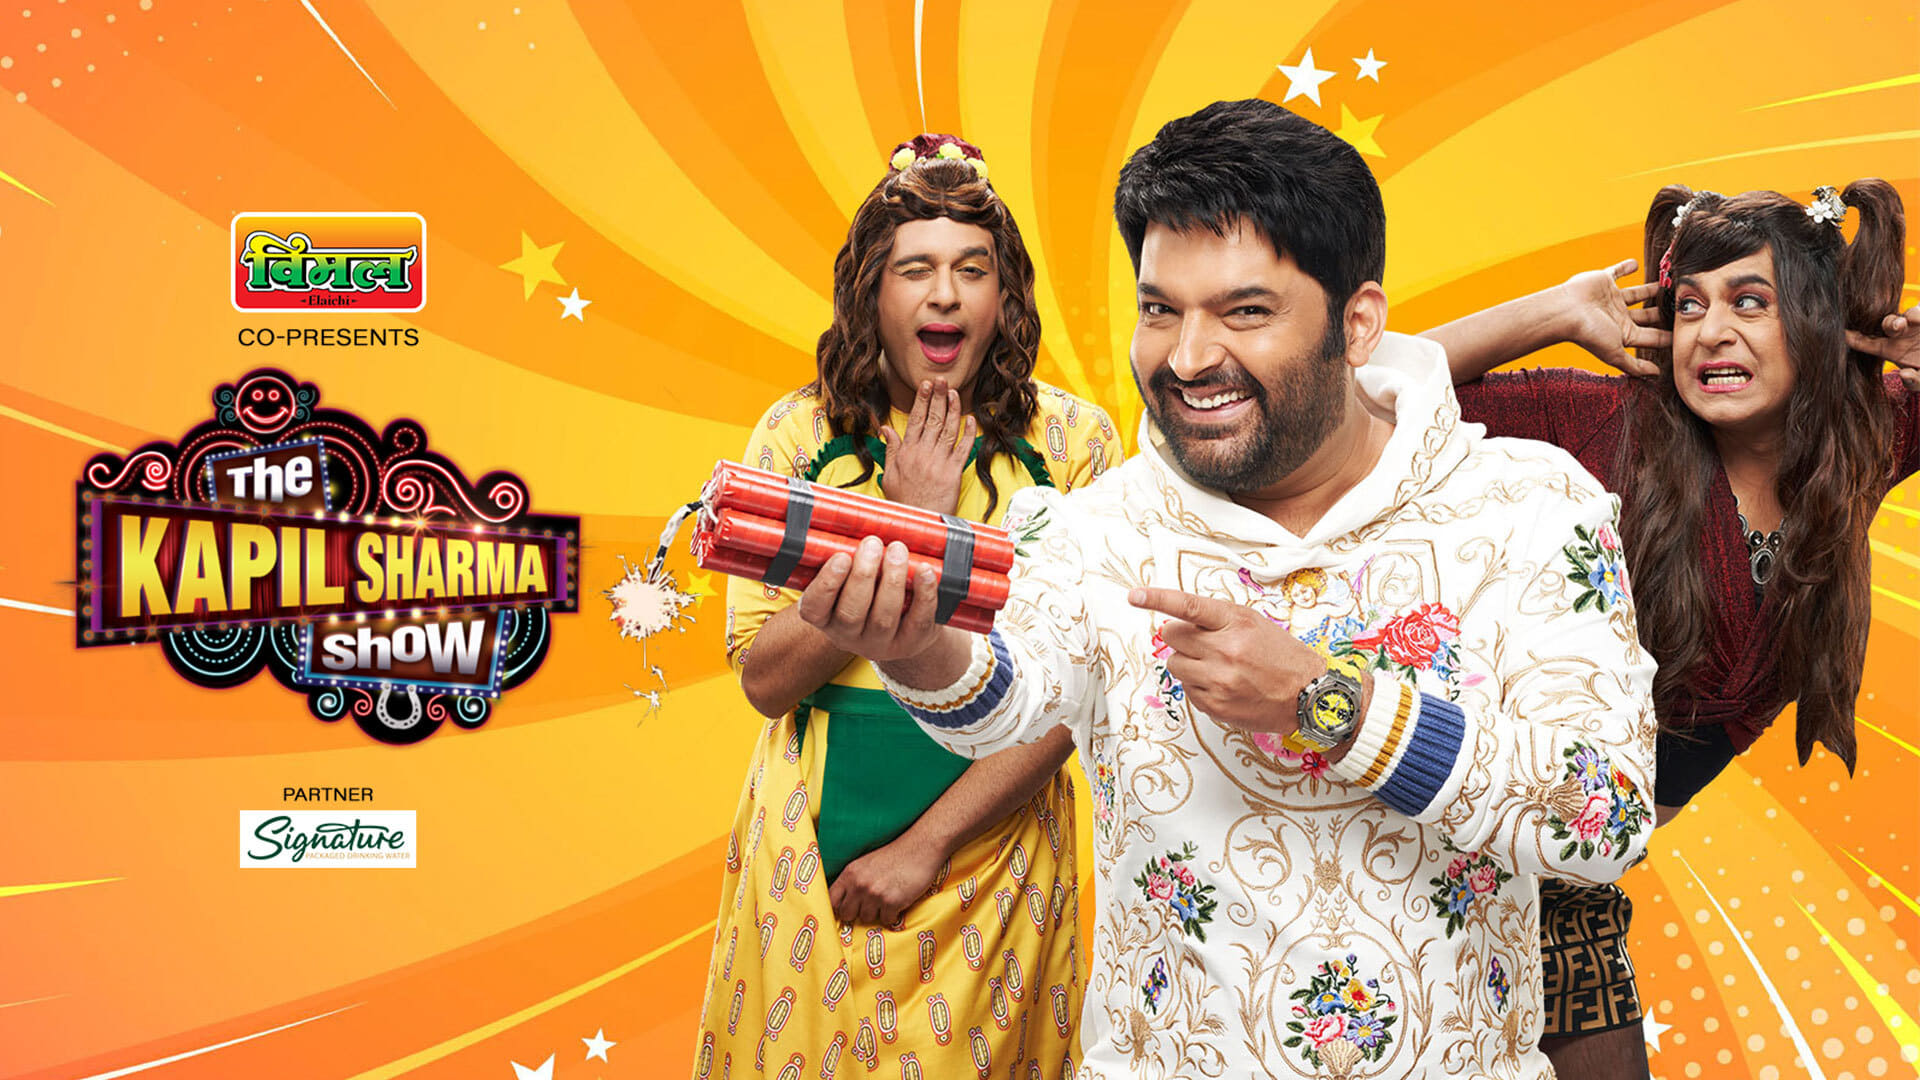 The Kapil Sharma Show - Season 2 Episode 123 : Double The Fun With Team Sooryavanshi